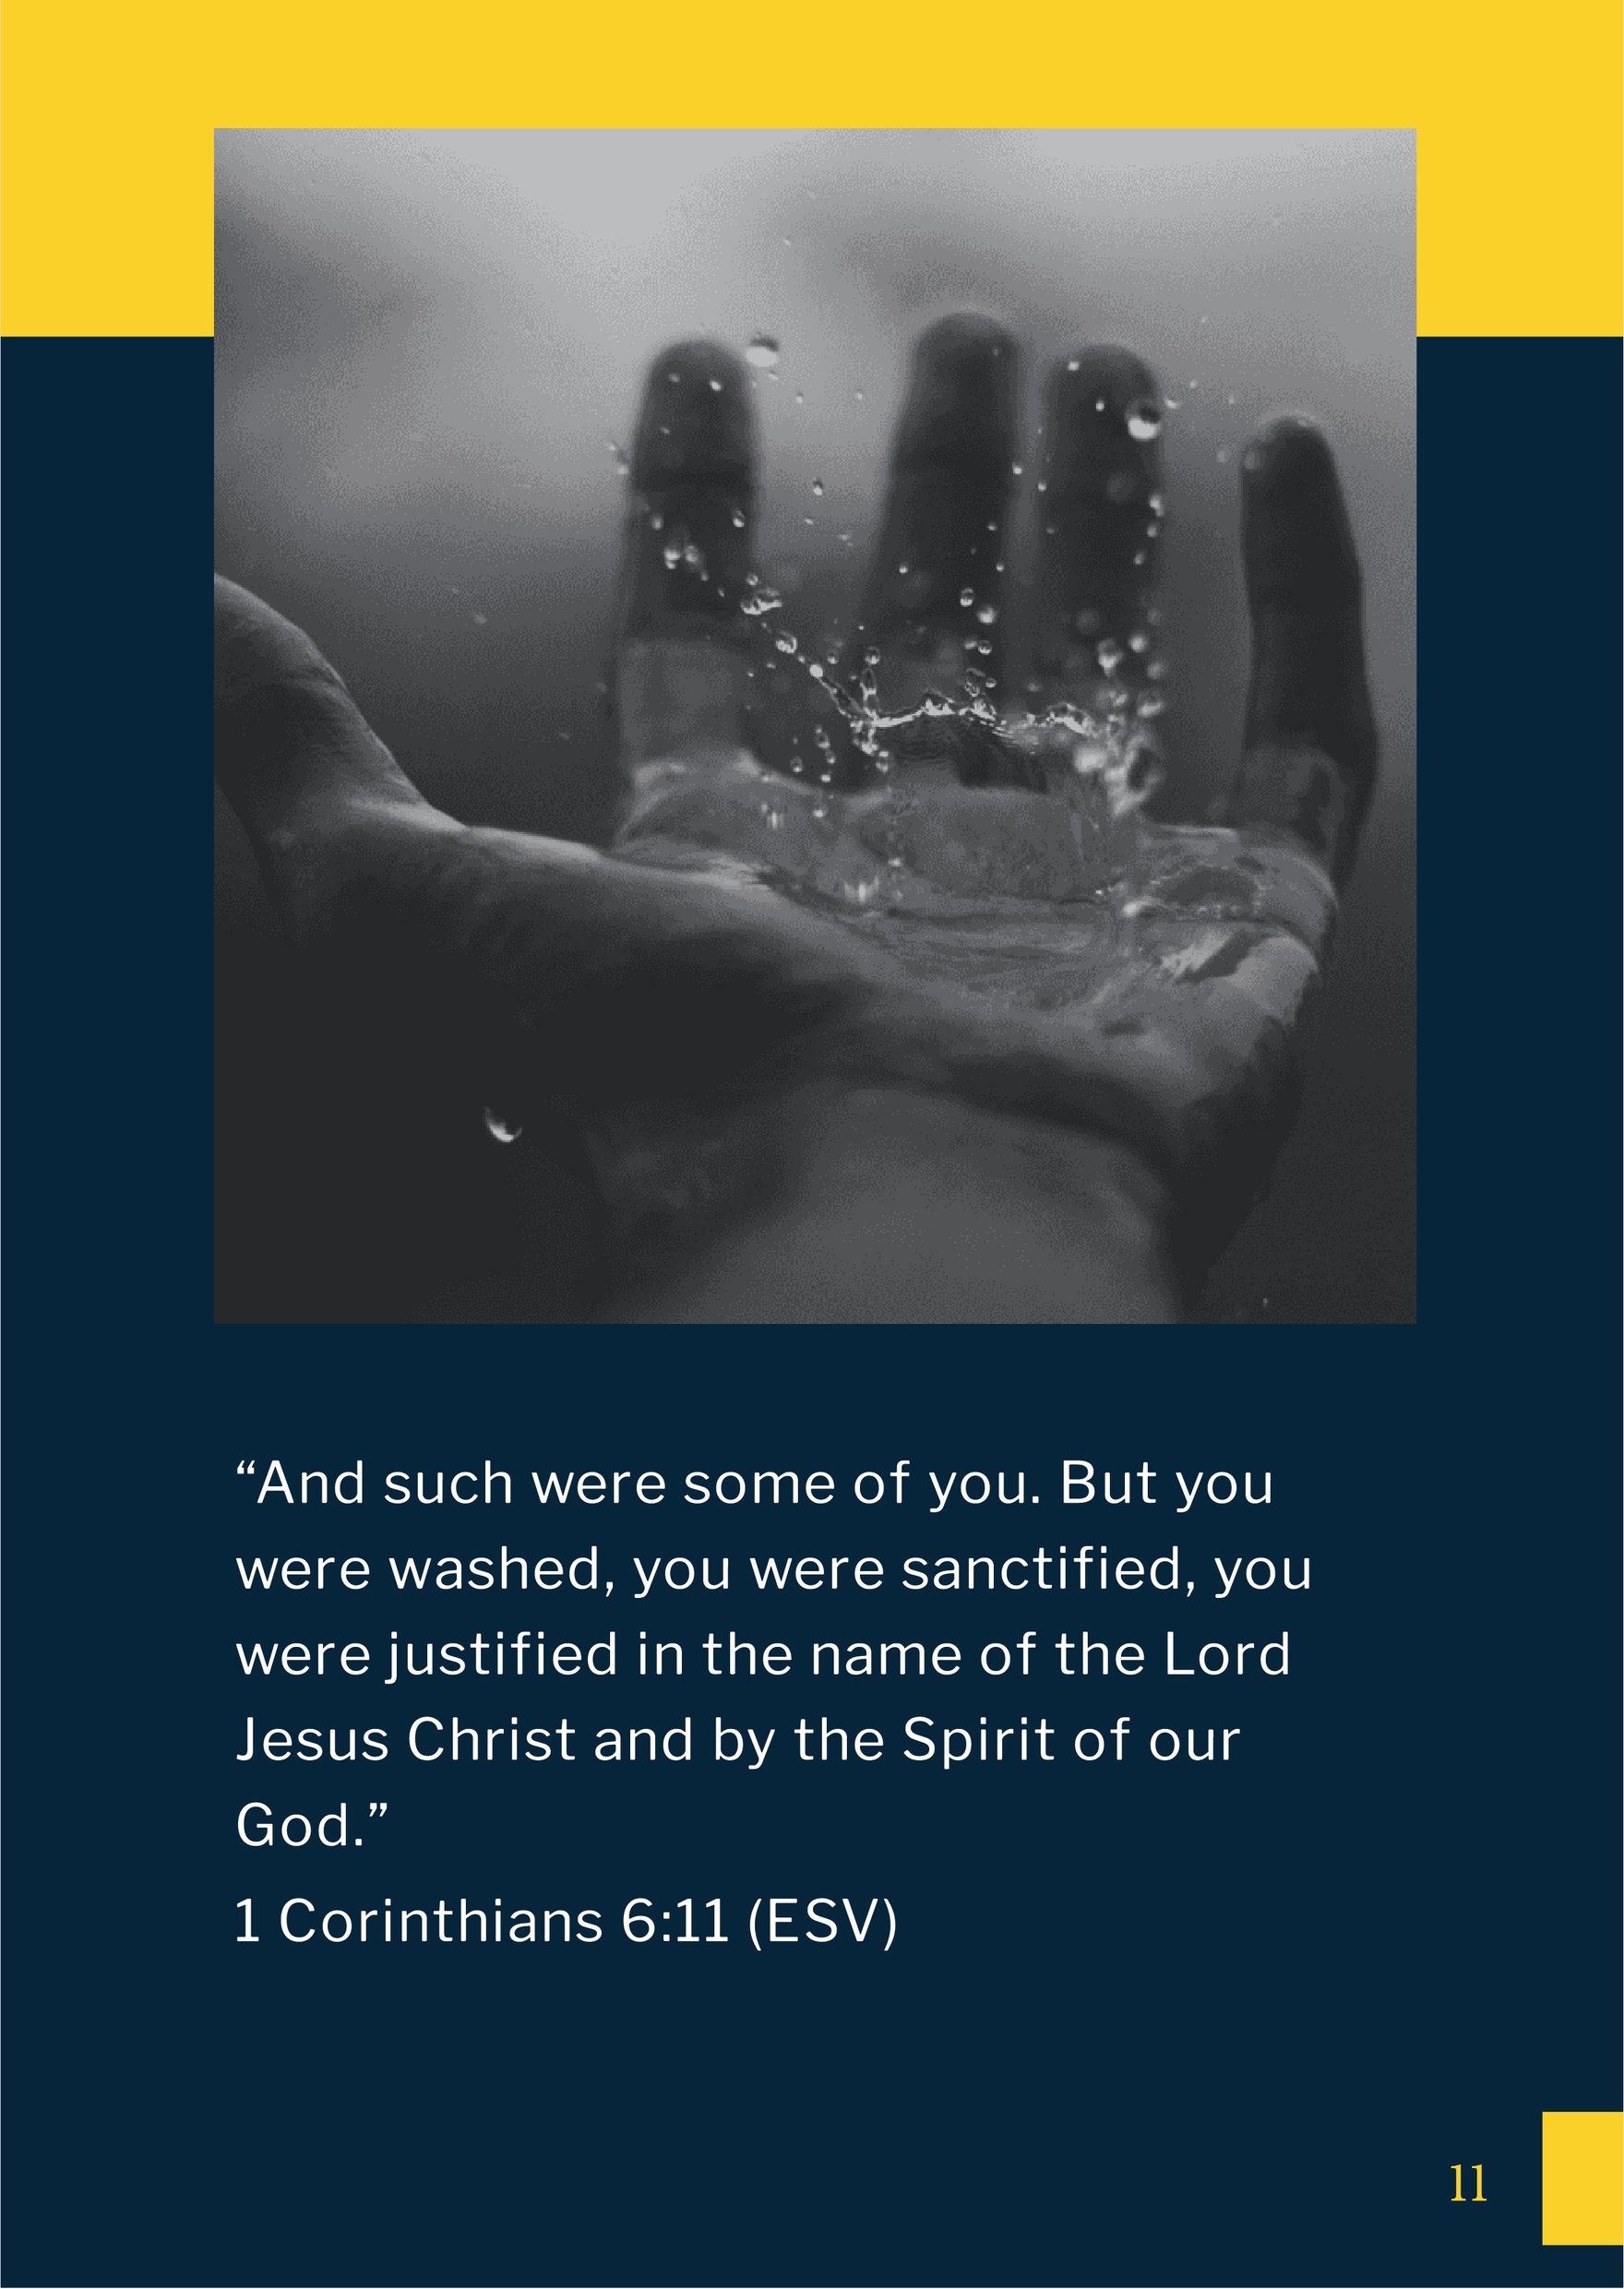 Baptism Booklet Template